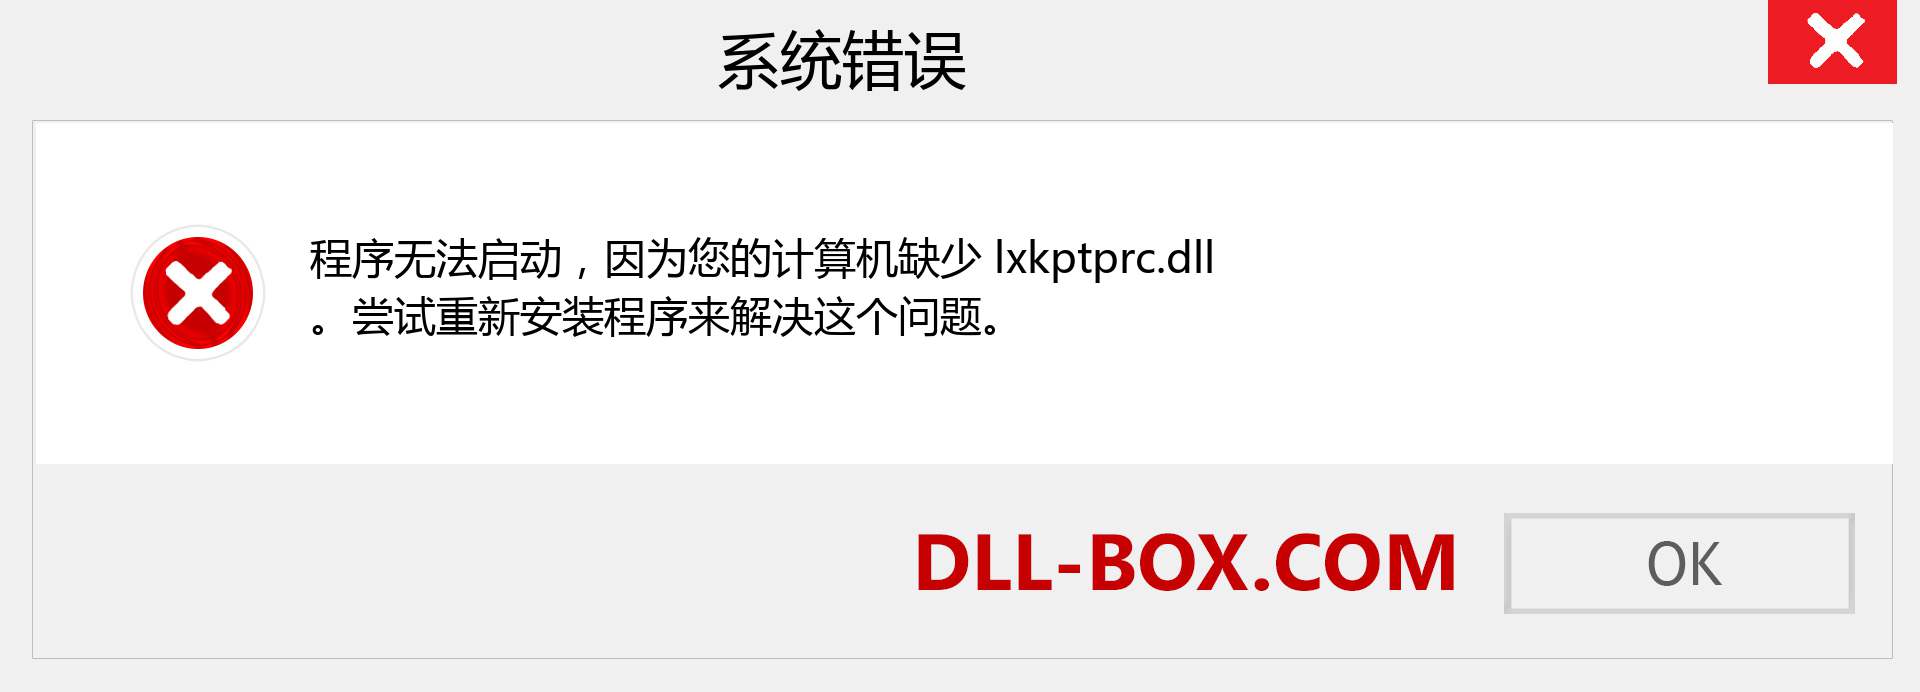 lxkptprc.dll 文件丢失？。 适用于 Windows 7、8、10 的下载 - 修复 Windows、照片、图像上的 lxkptprc dll 丢失错误